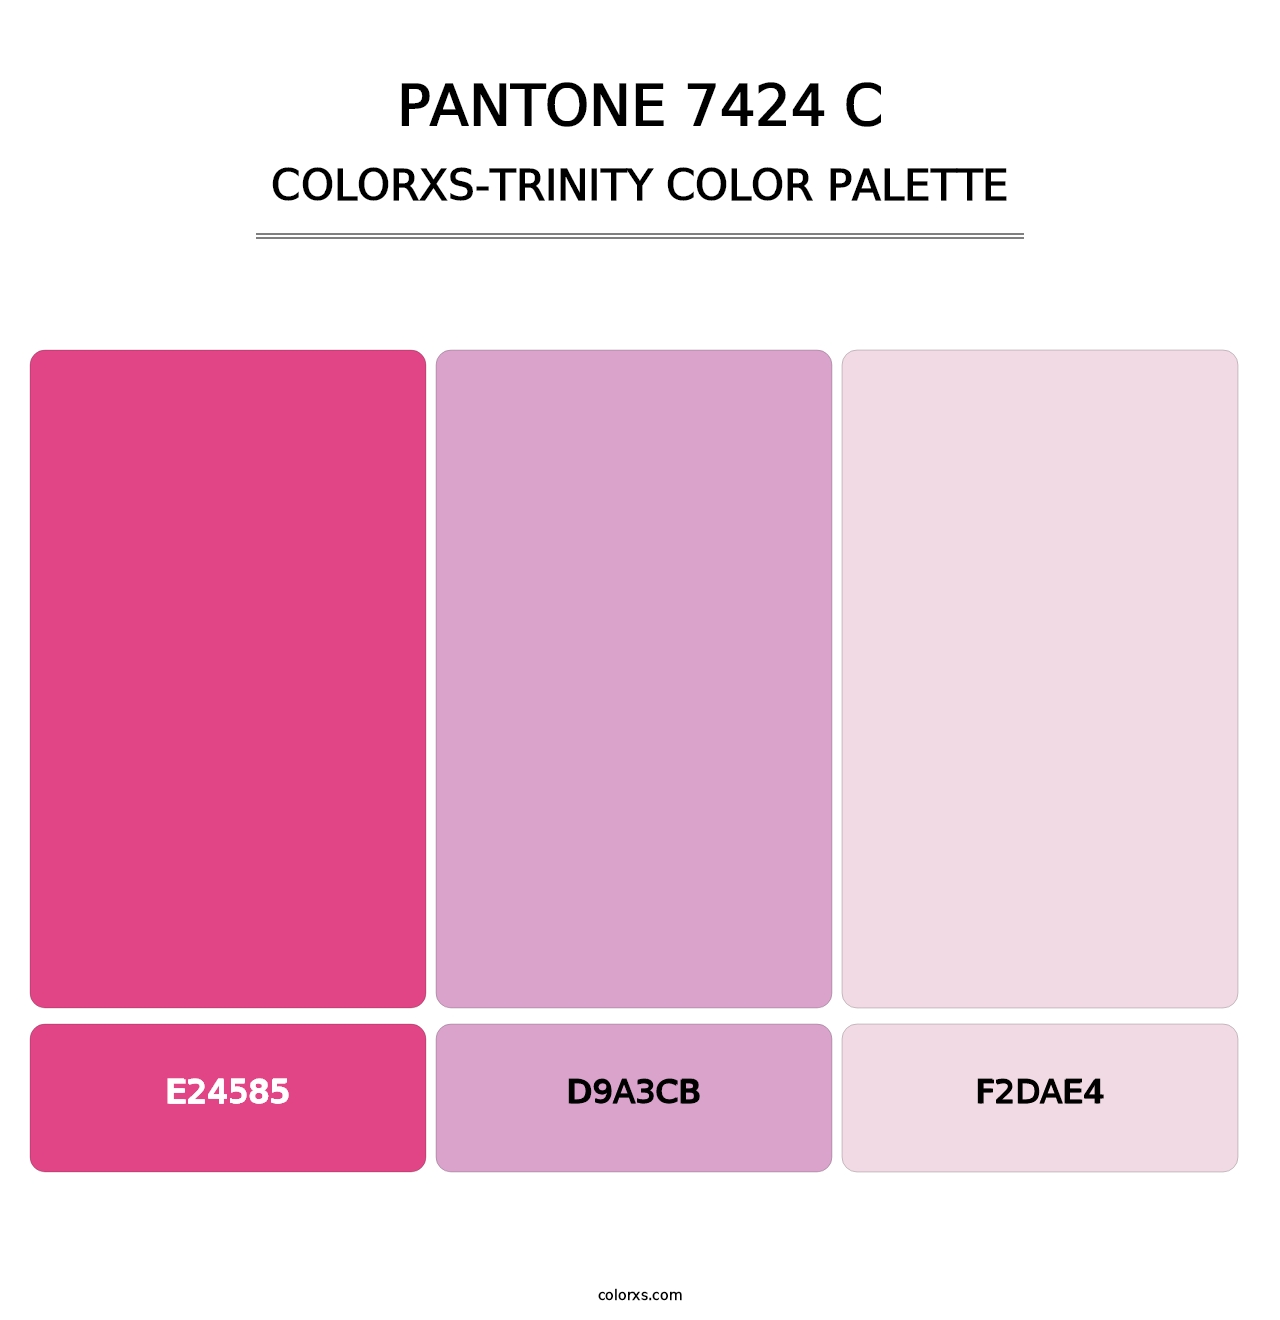 PANTONE 7424 C - Colorxs Trinity Palette